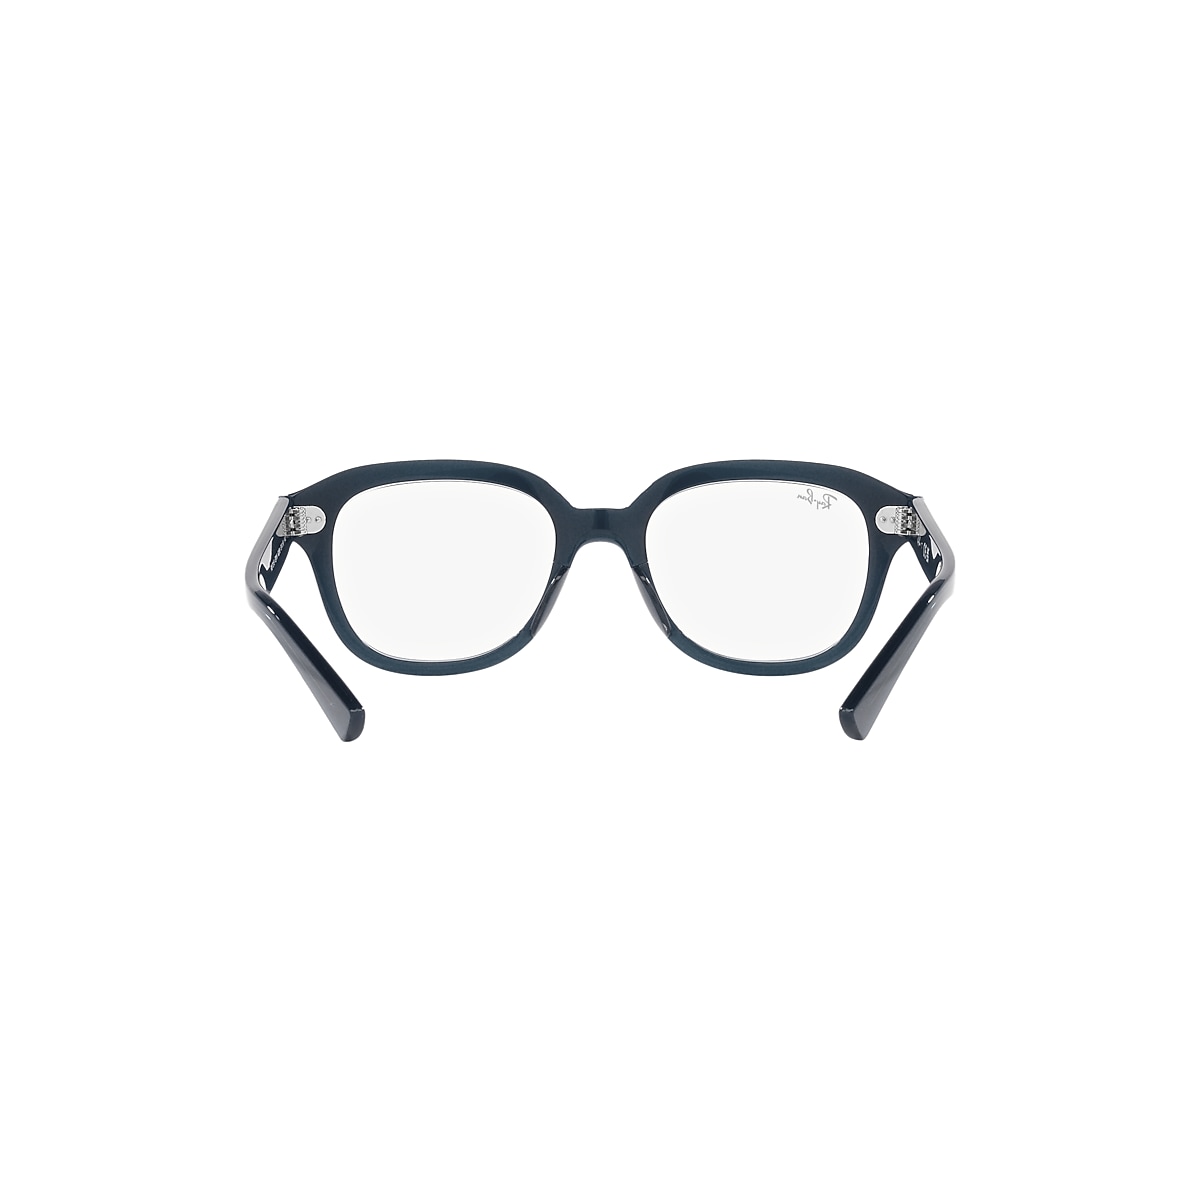 ERIK OPTICS Eyeglasses with Opal Dark Blue Frame - Ray-Ban